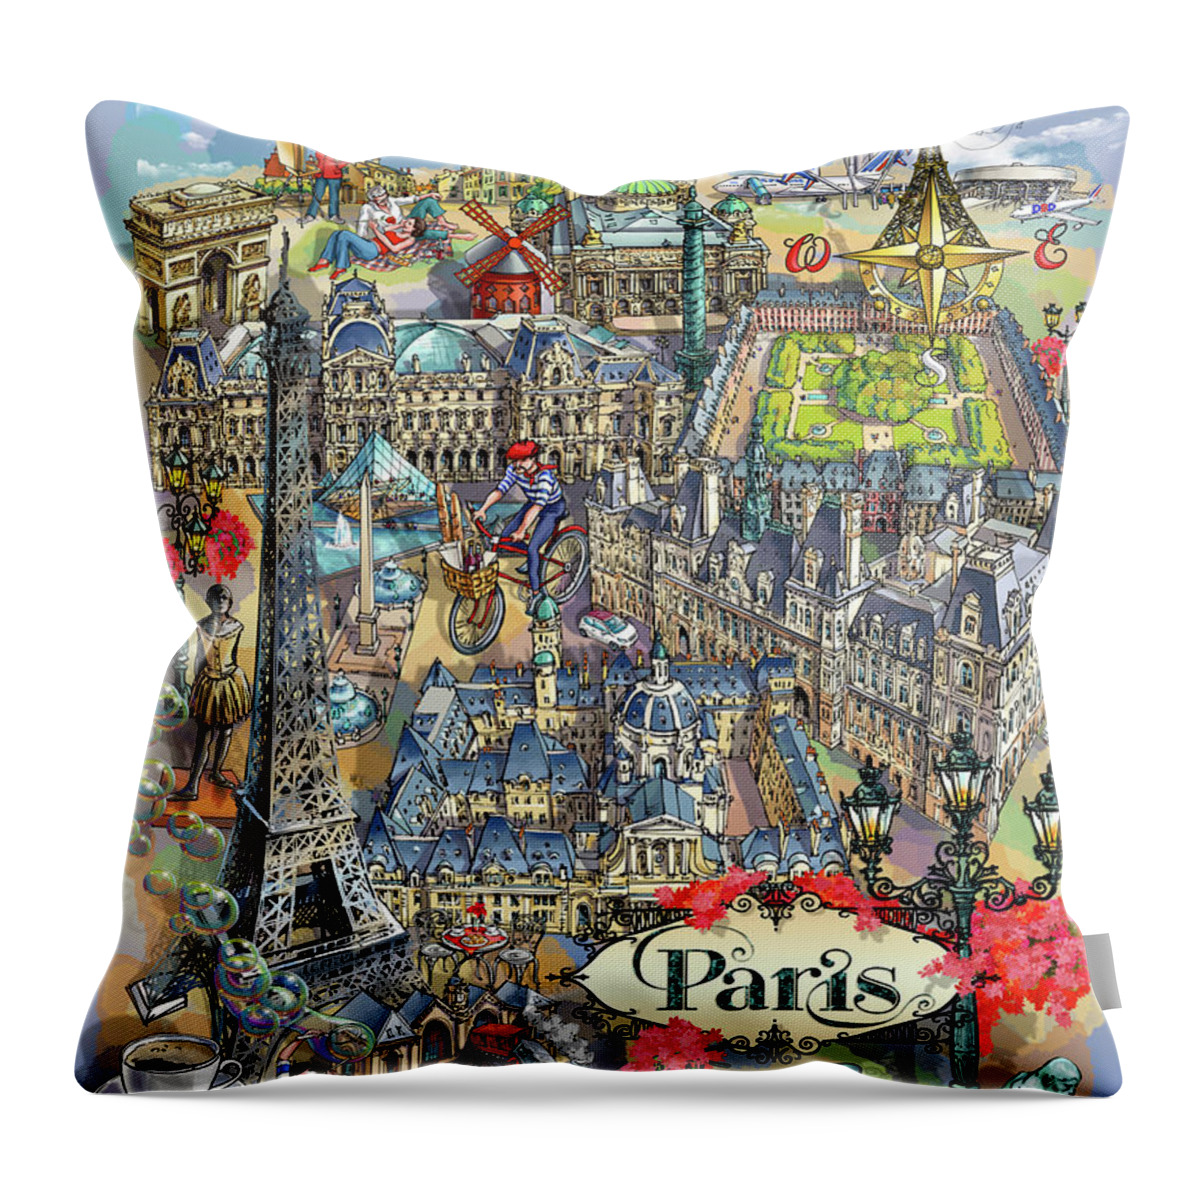 Paris Throw Pillow featuring the digital art Paris Theme - I by Maria Rabinky